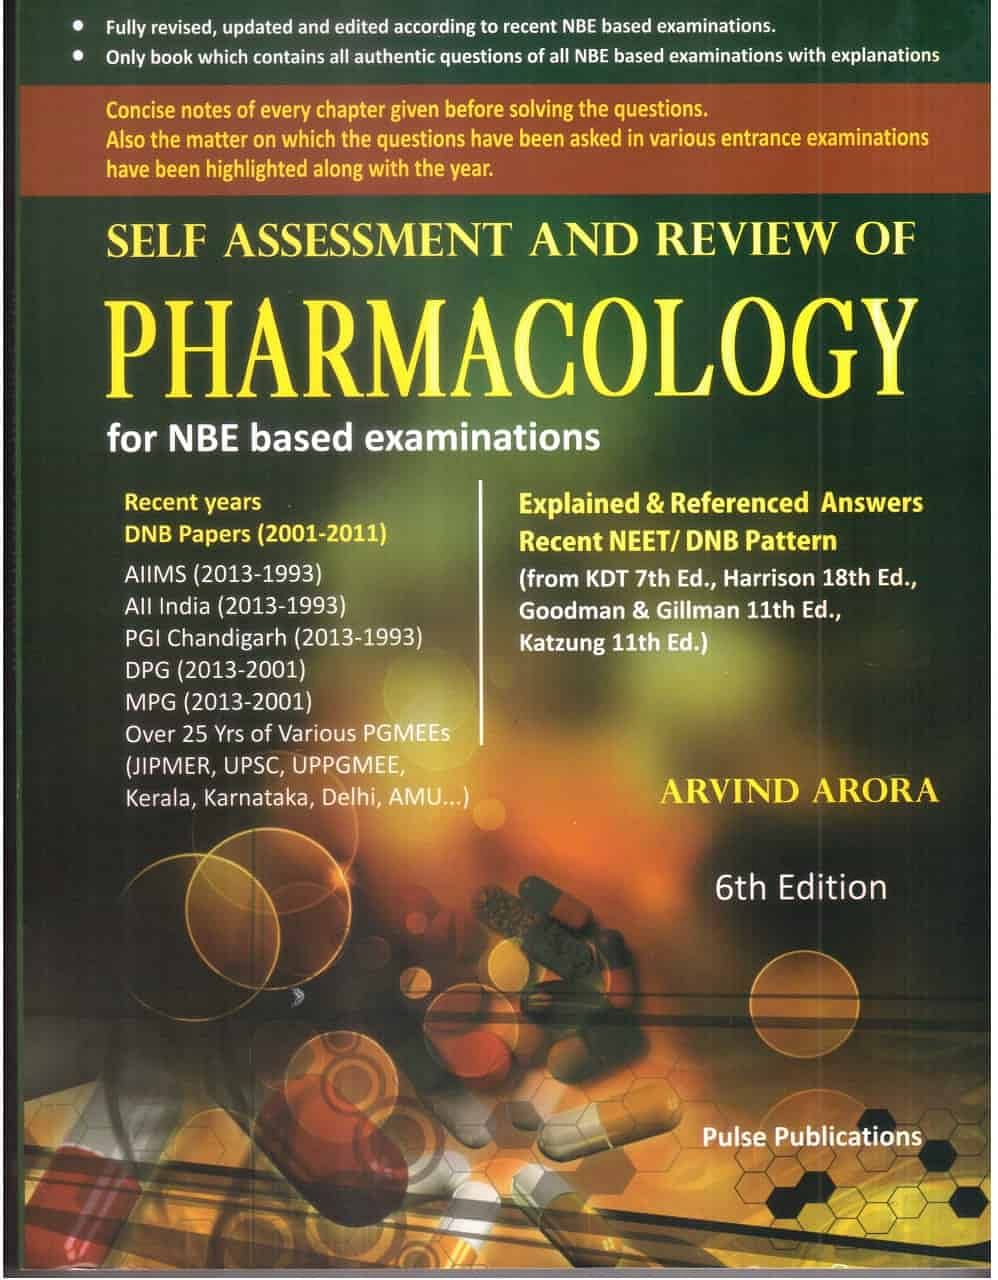 Platinum Notes – Preclinical Sciences Volume 1 by Ashfaq Ul Hassan